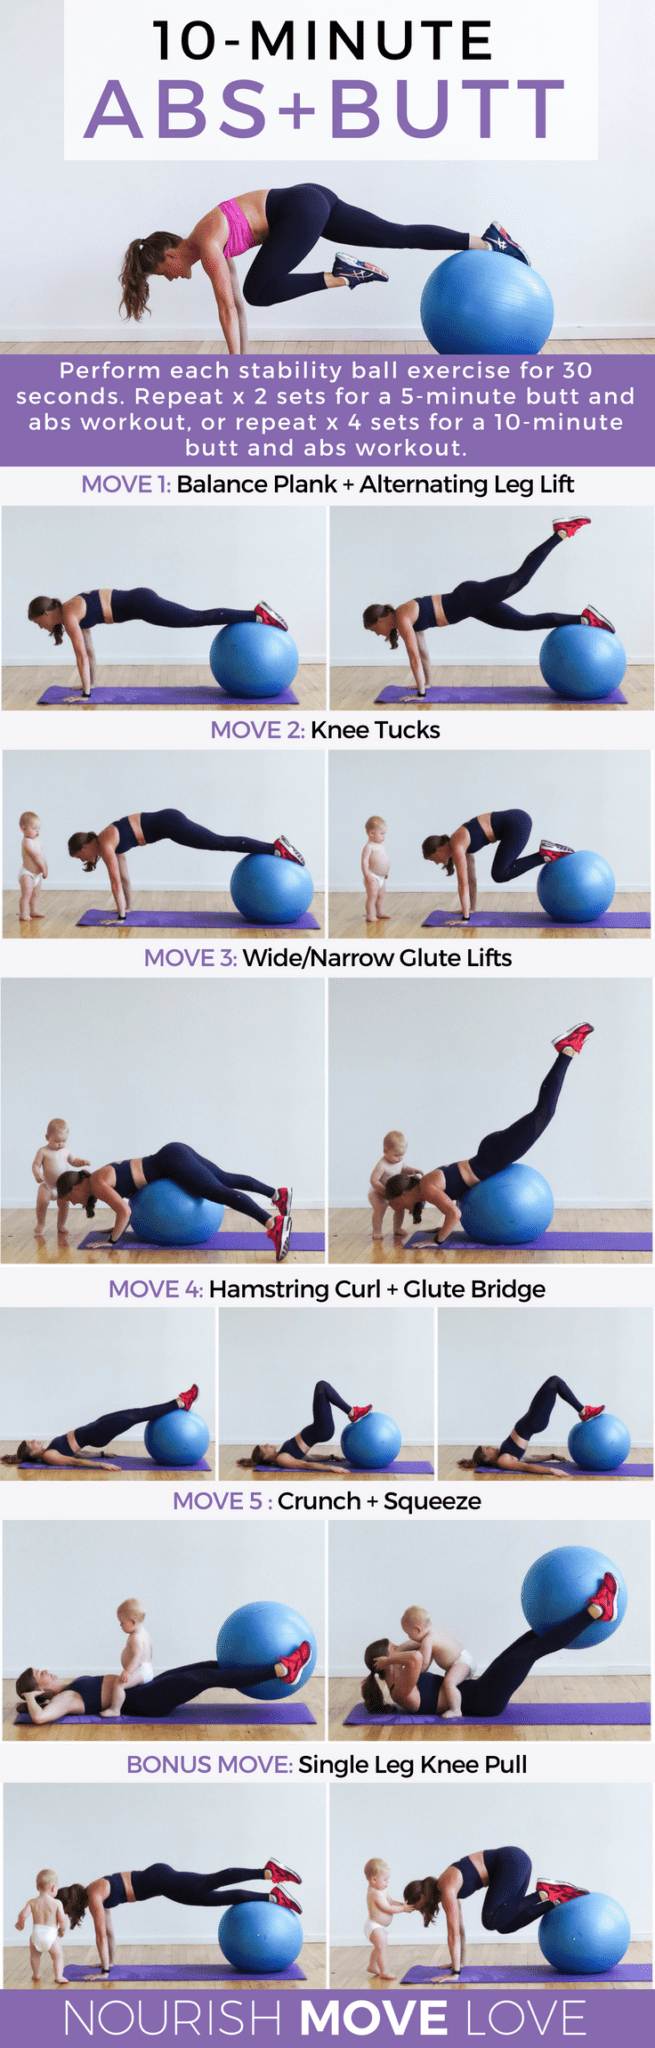 exercise ball routines